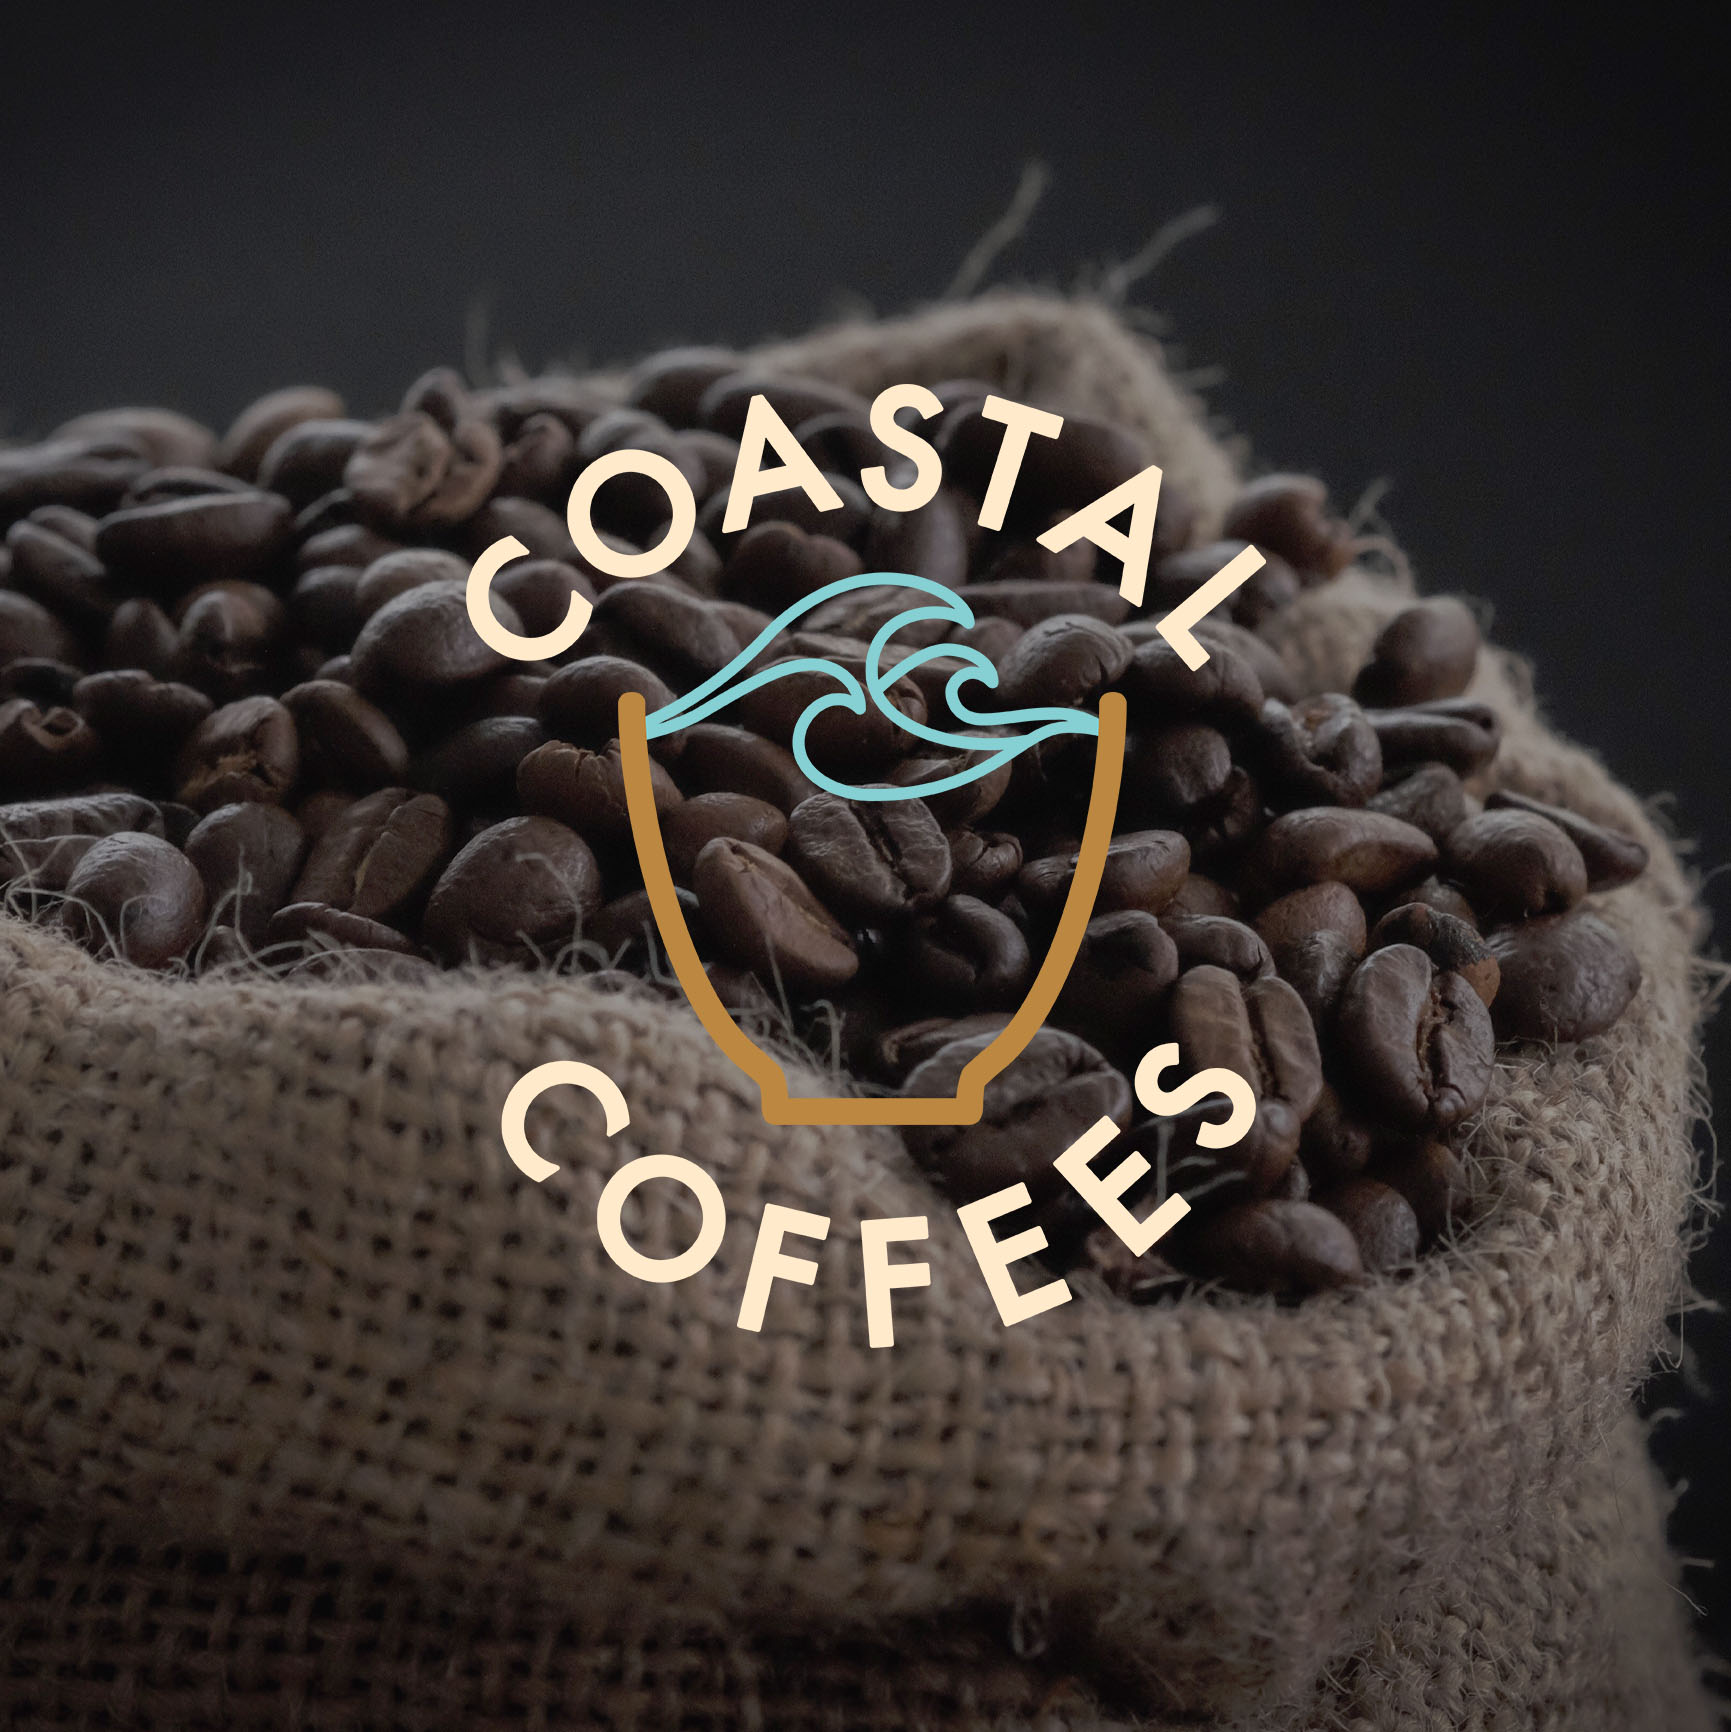 coastal coffees logo laid over a bag of coffee beans